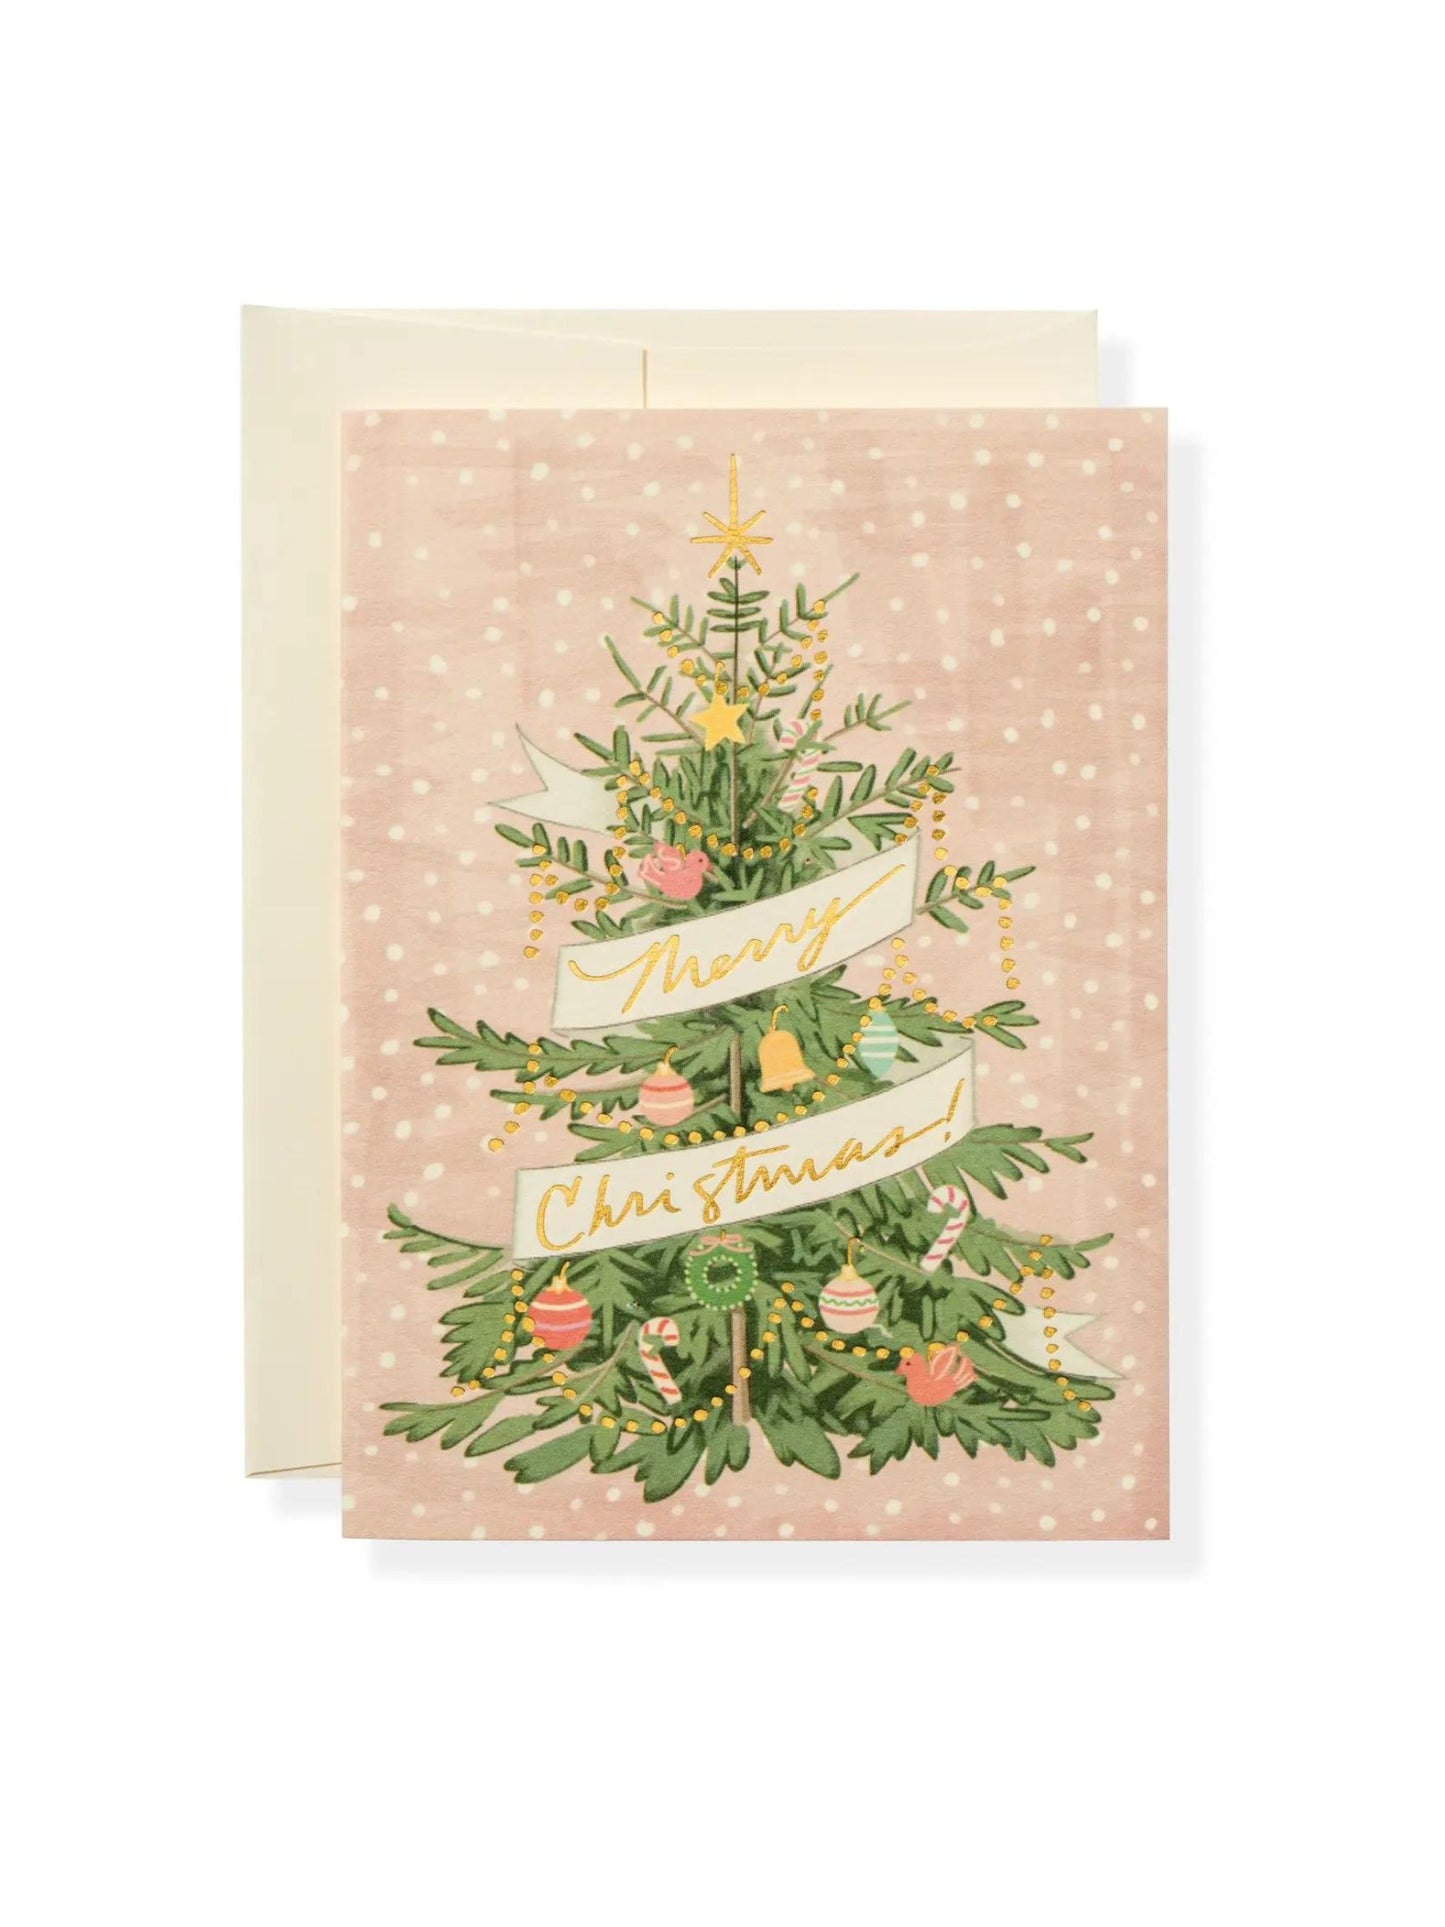 Merry Christmas Tree Greeting Card